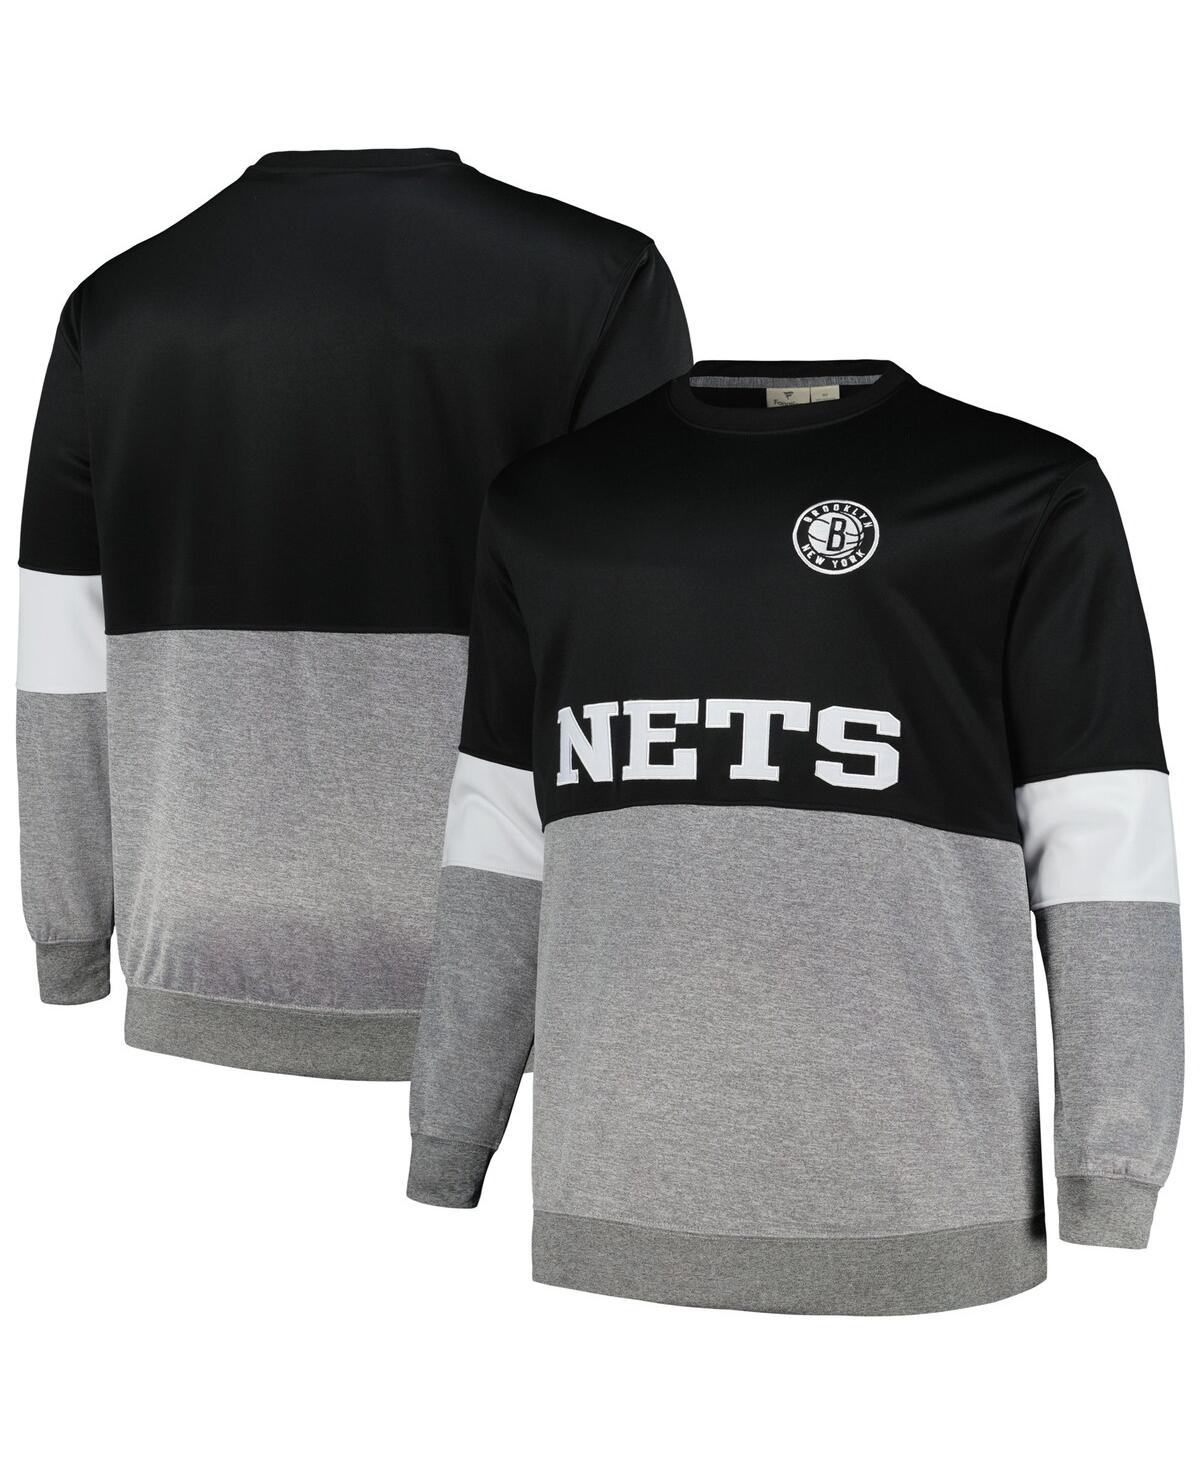 Men's Fanatics Black, Heather Gray Brooklyn Nets Big and Tall Split Pullover Sweatshirt - Black, Heather Gray